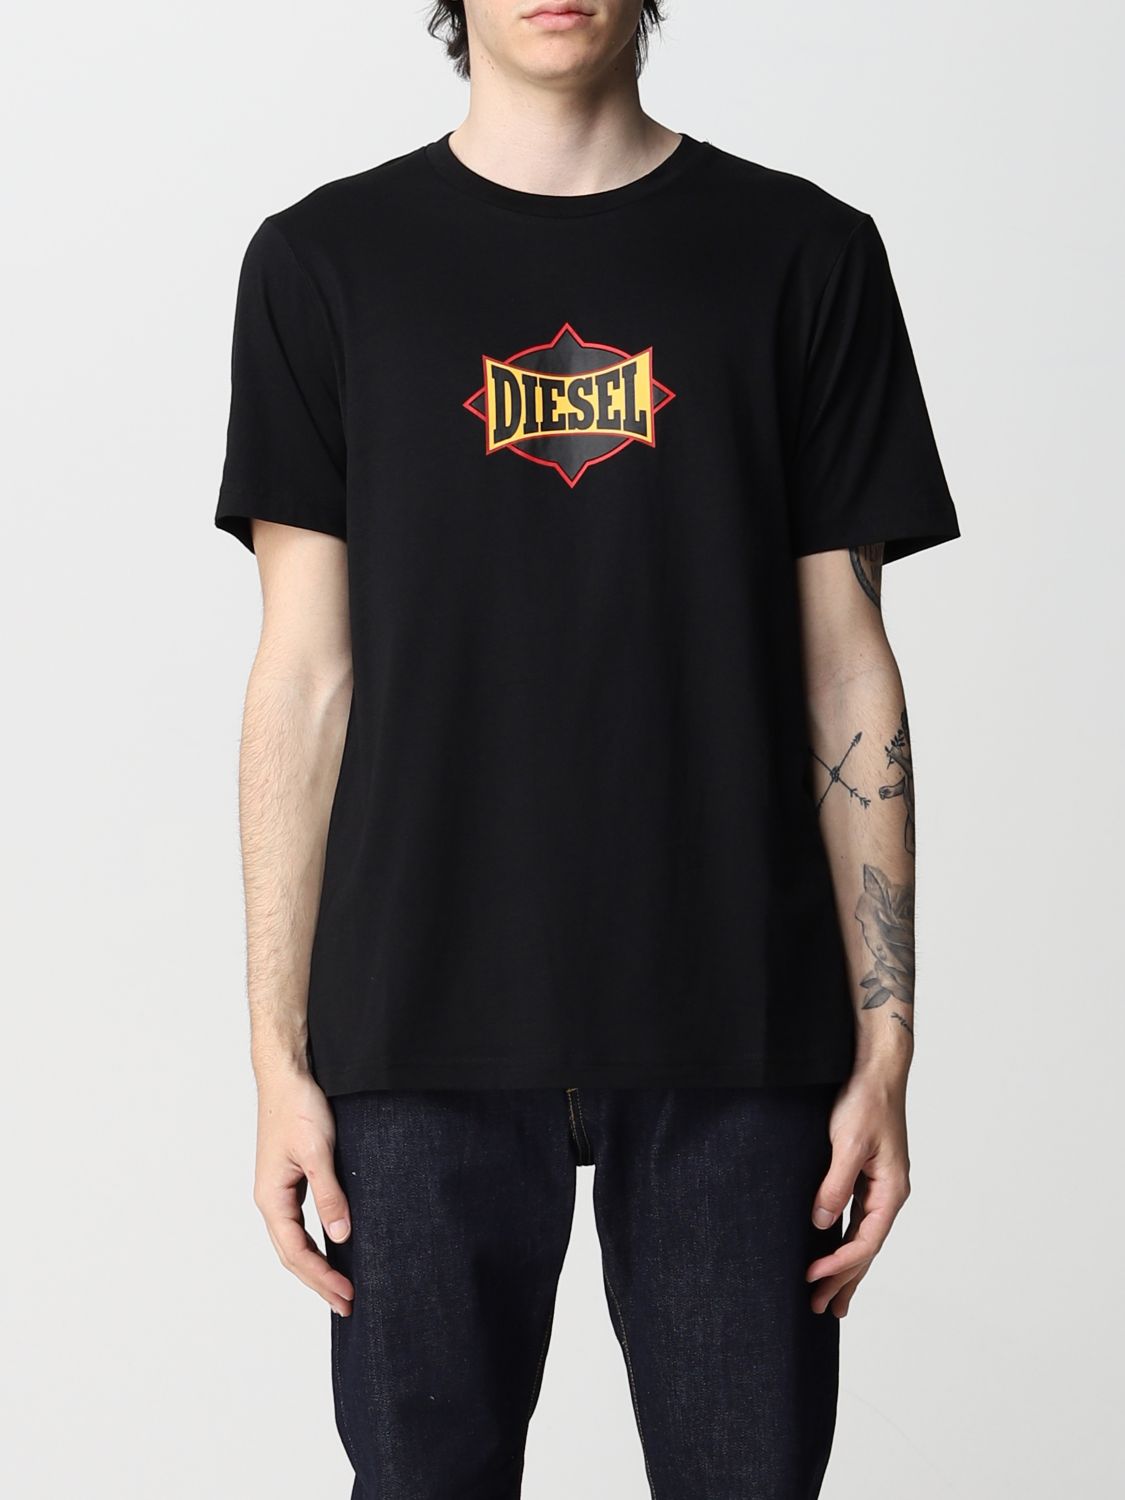 DIESEL: cotton t-shirt with logo - Black | Diesel t-shirt A038430HAYU ...